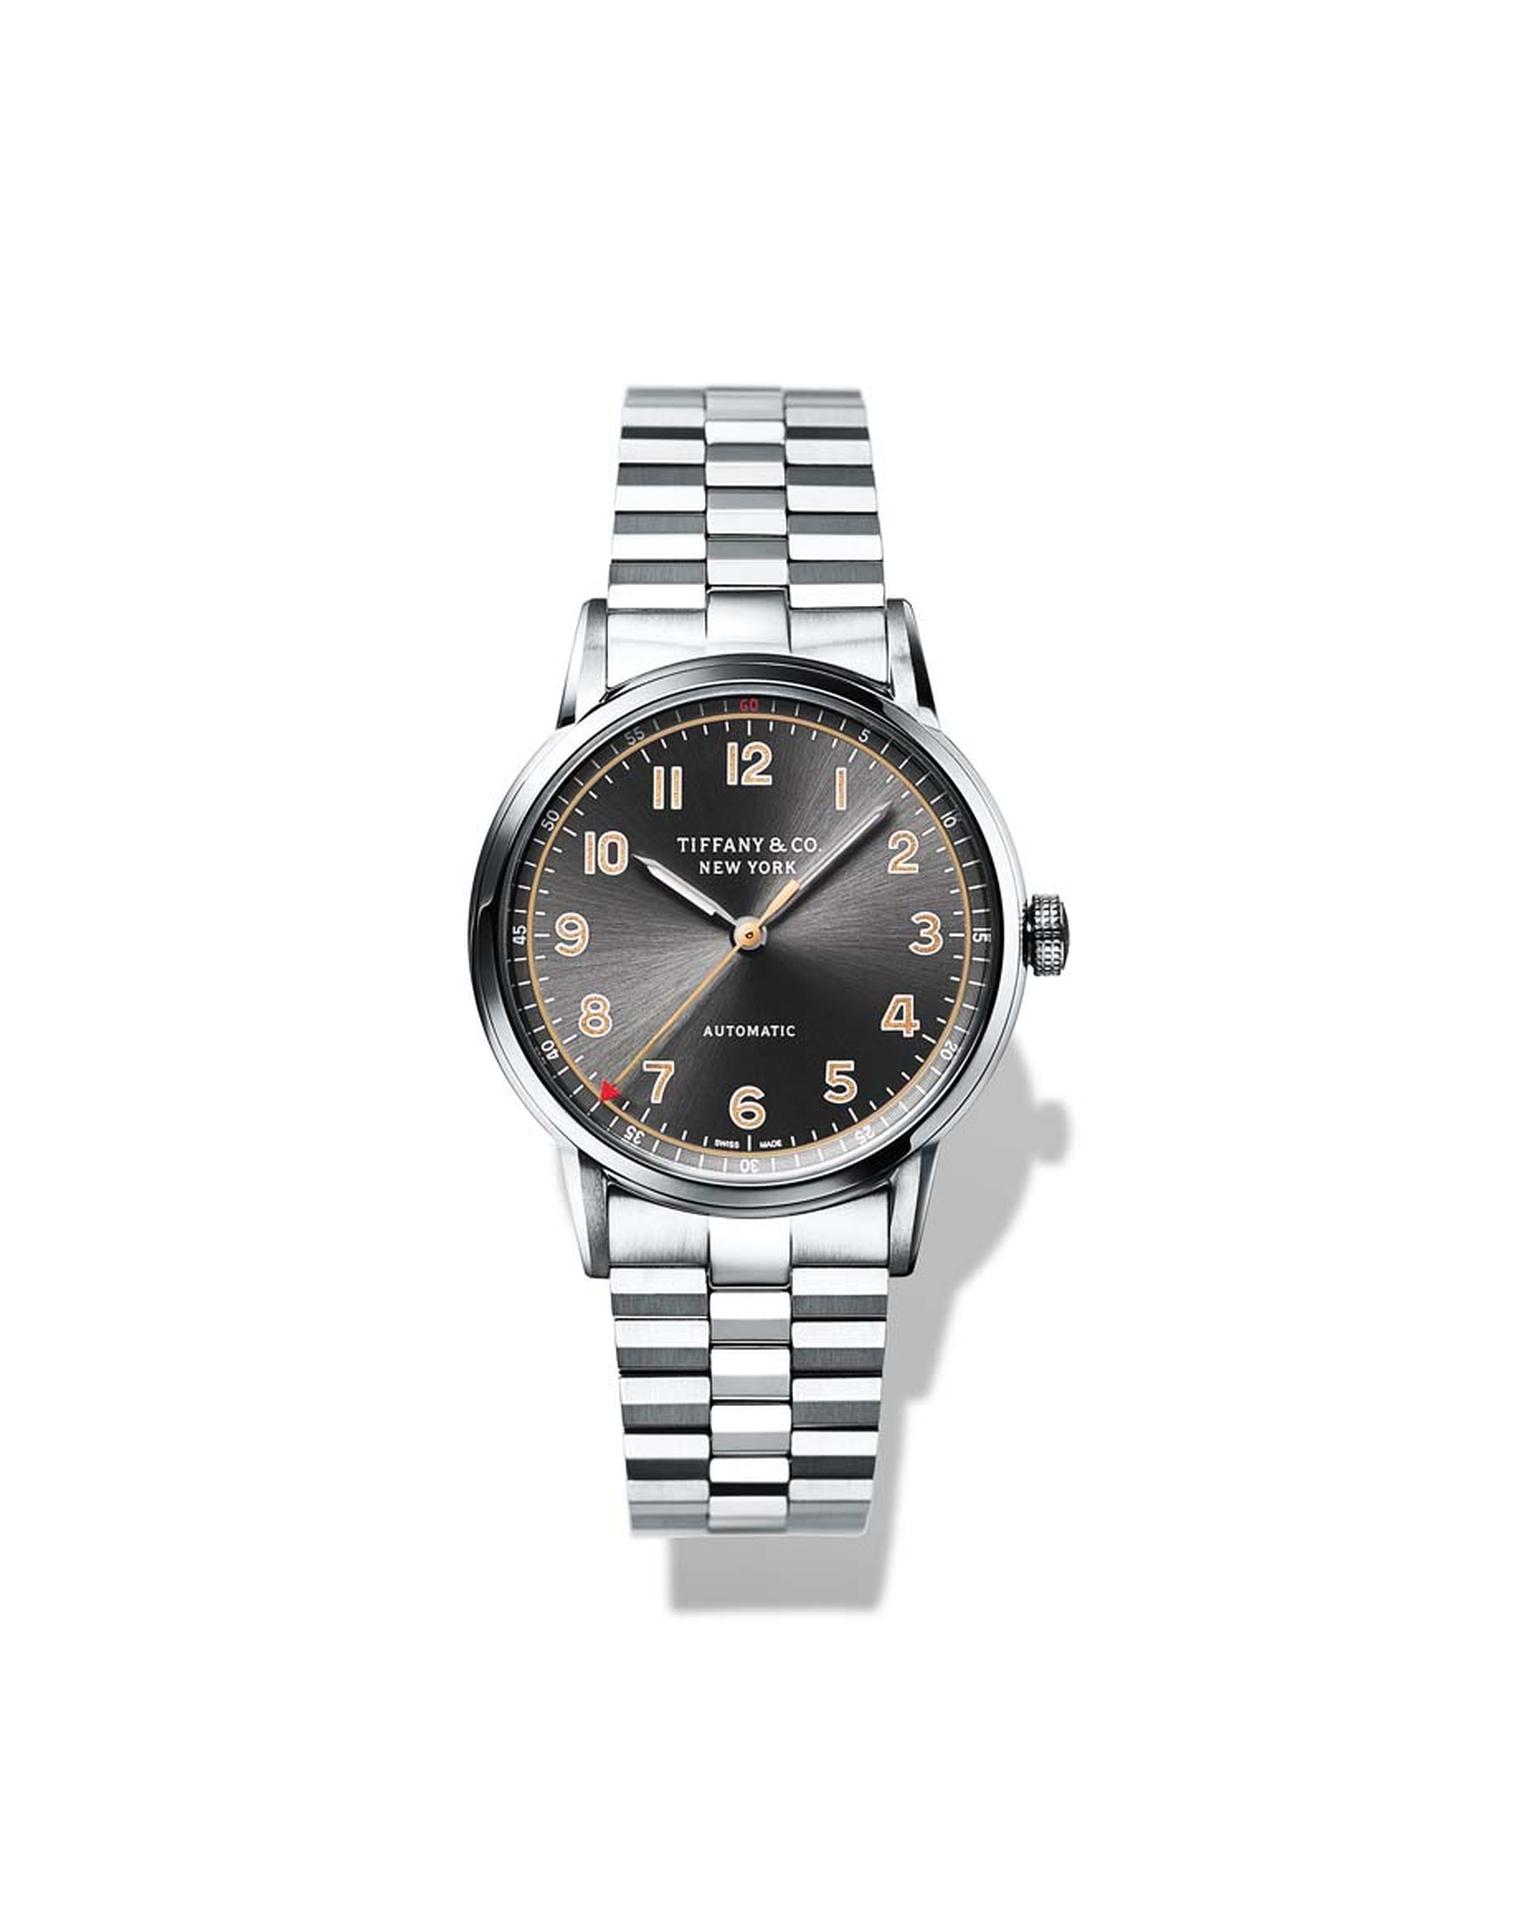 Watch 001-520-00068 ST - Gentleman's ESQ Wristwatches - Robertson Jewelers  - New Milford, CT